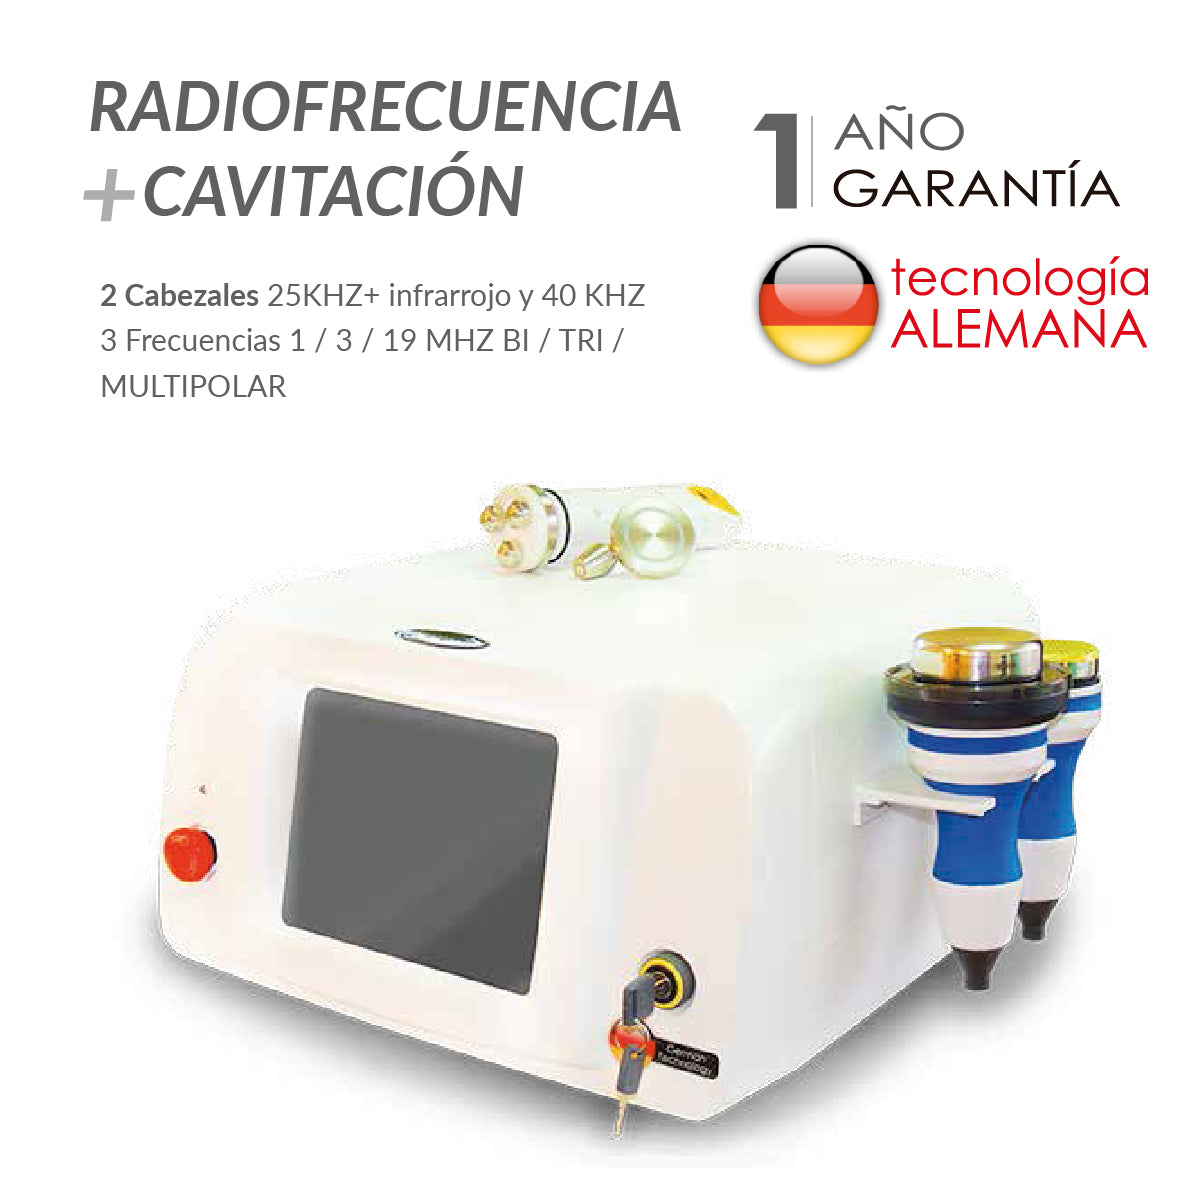 Radiofrecuencia + Cavitación